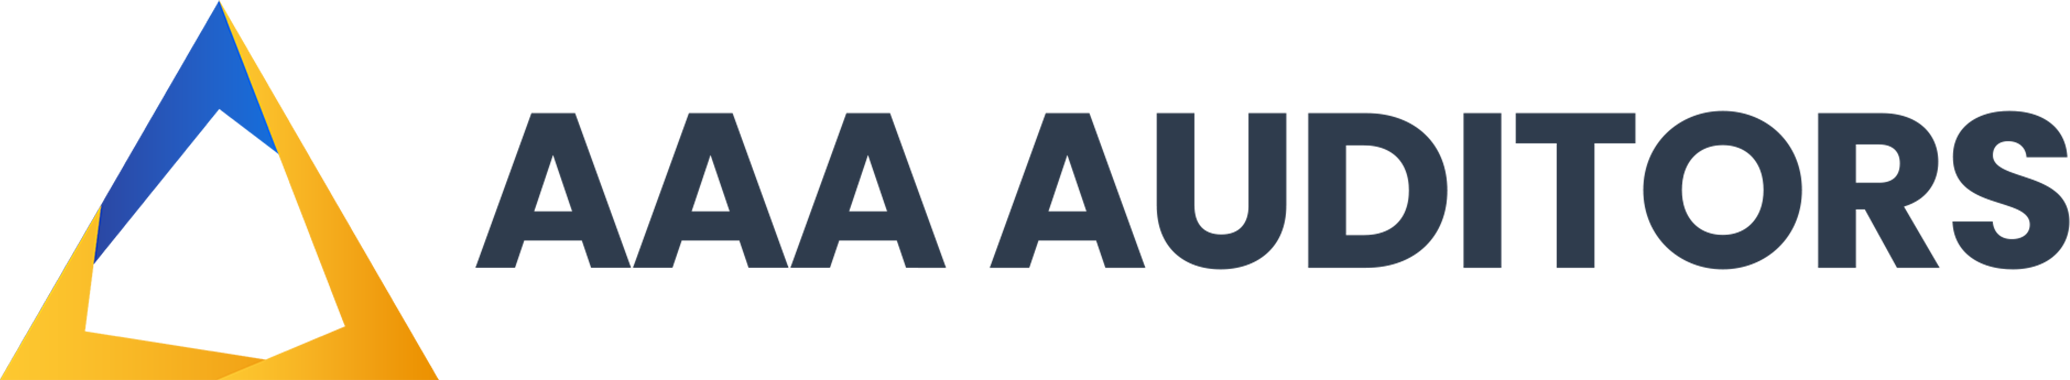 AAA Auditors horizontal logo with dark logotype.